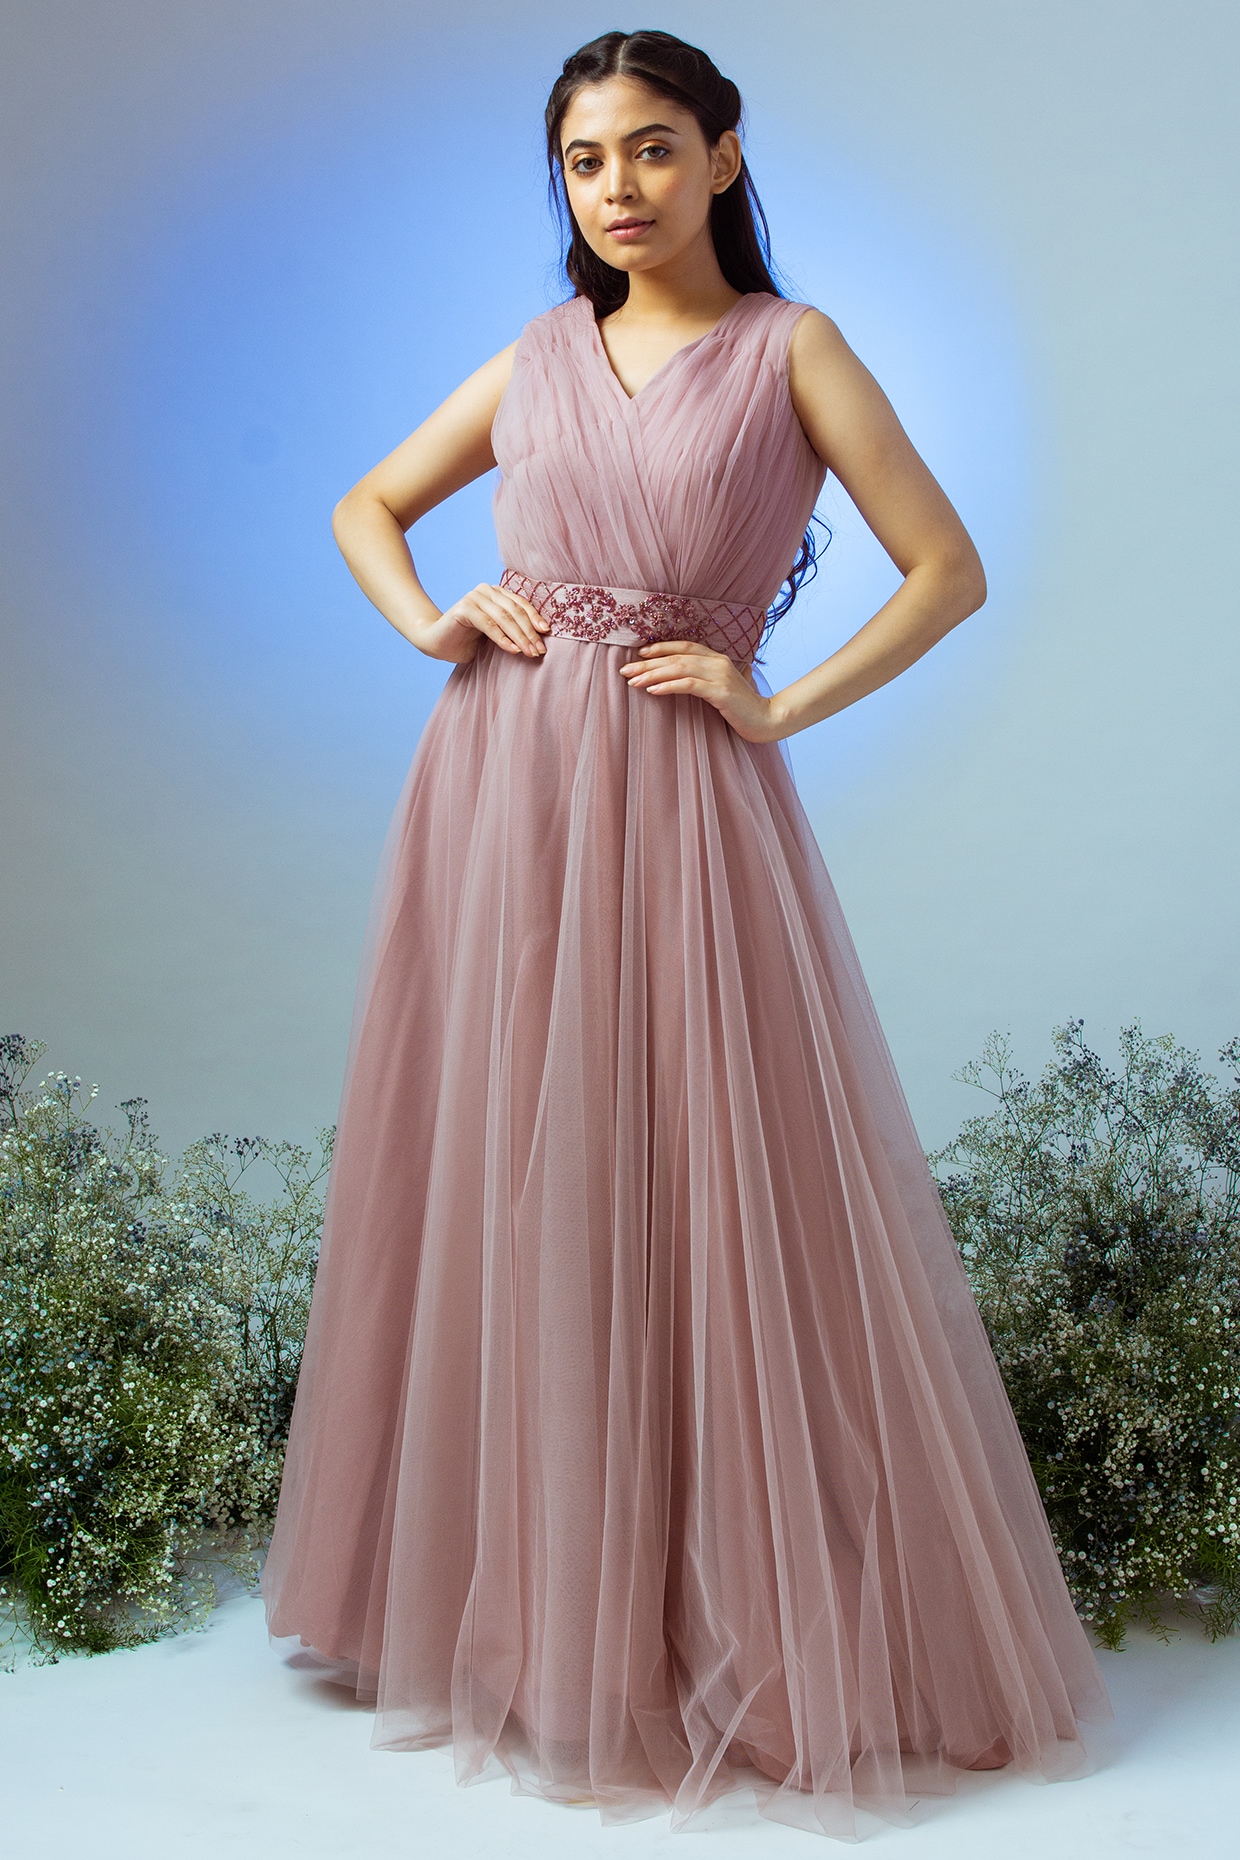 Georgette Gowns - Shop Georgette Gown Dress Designs Online